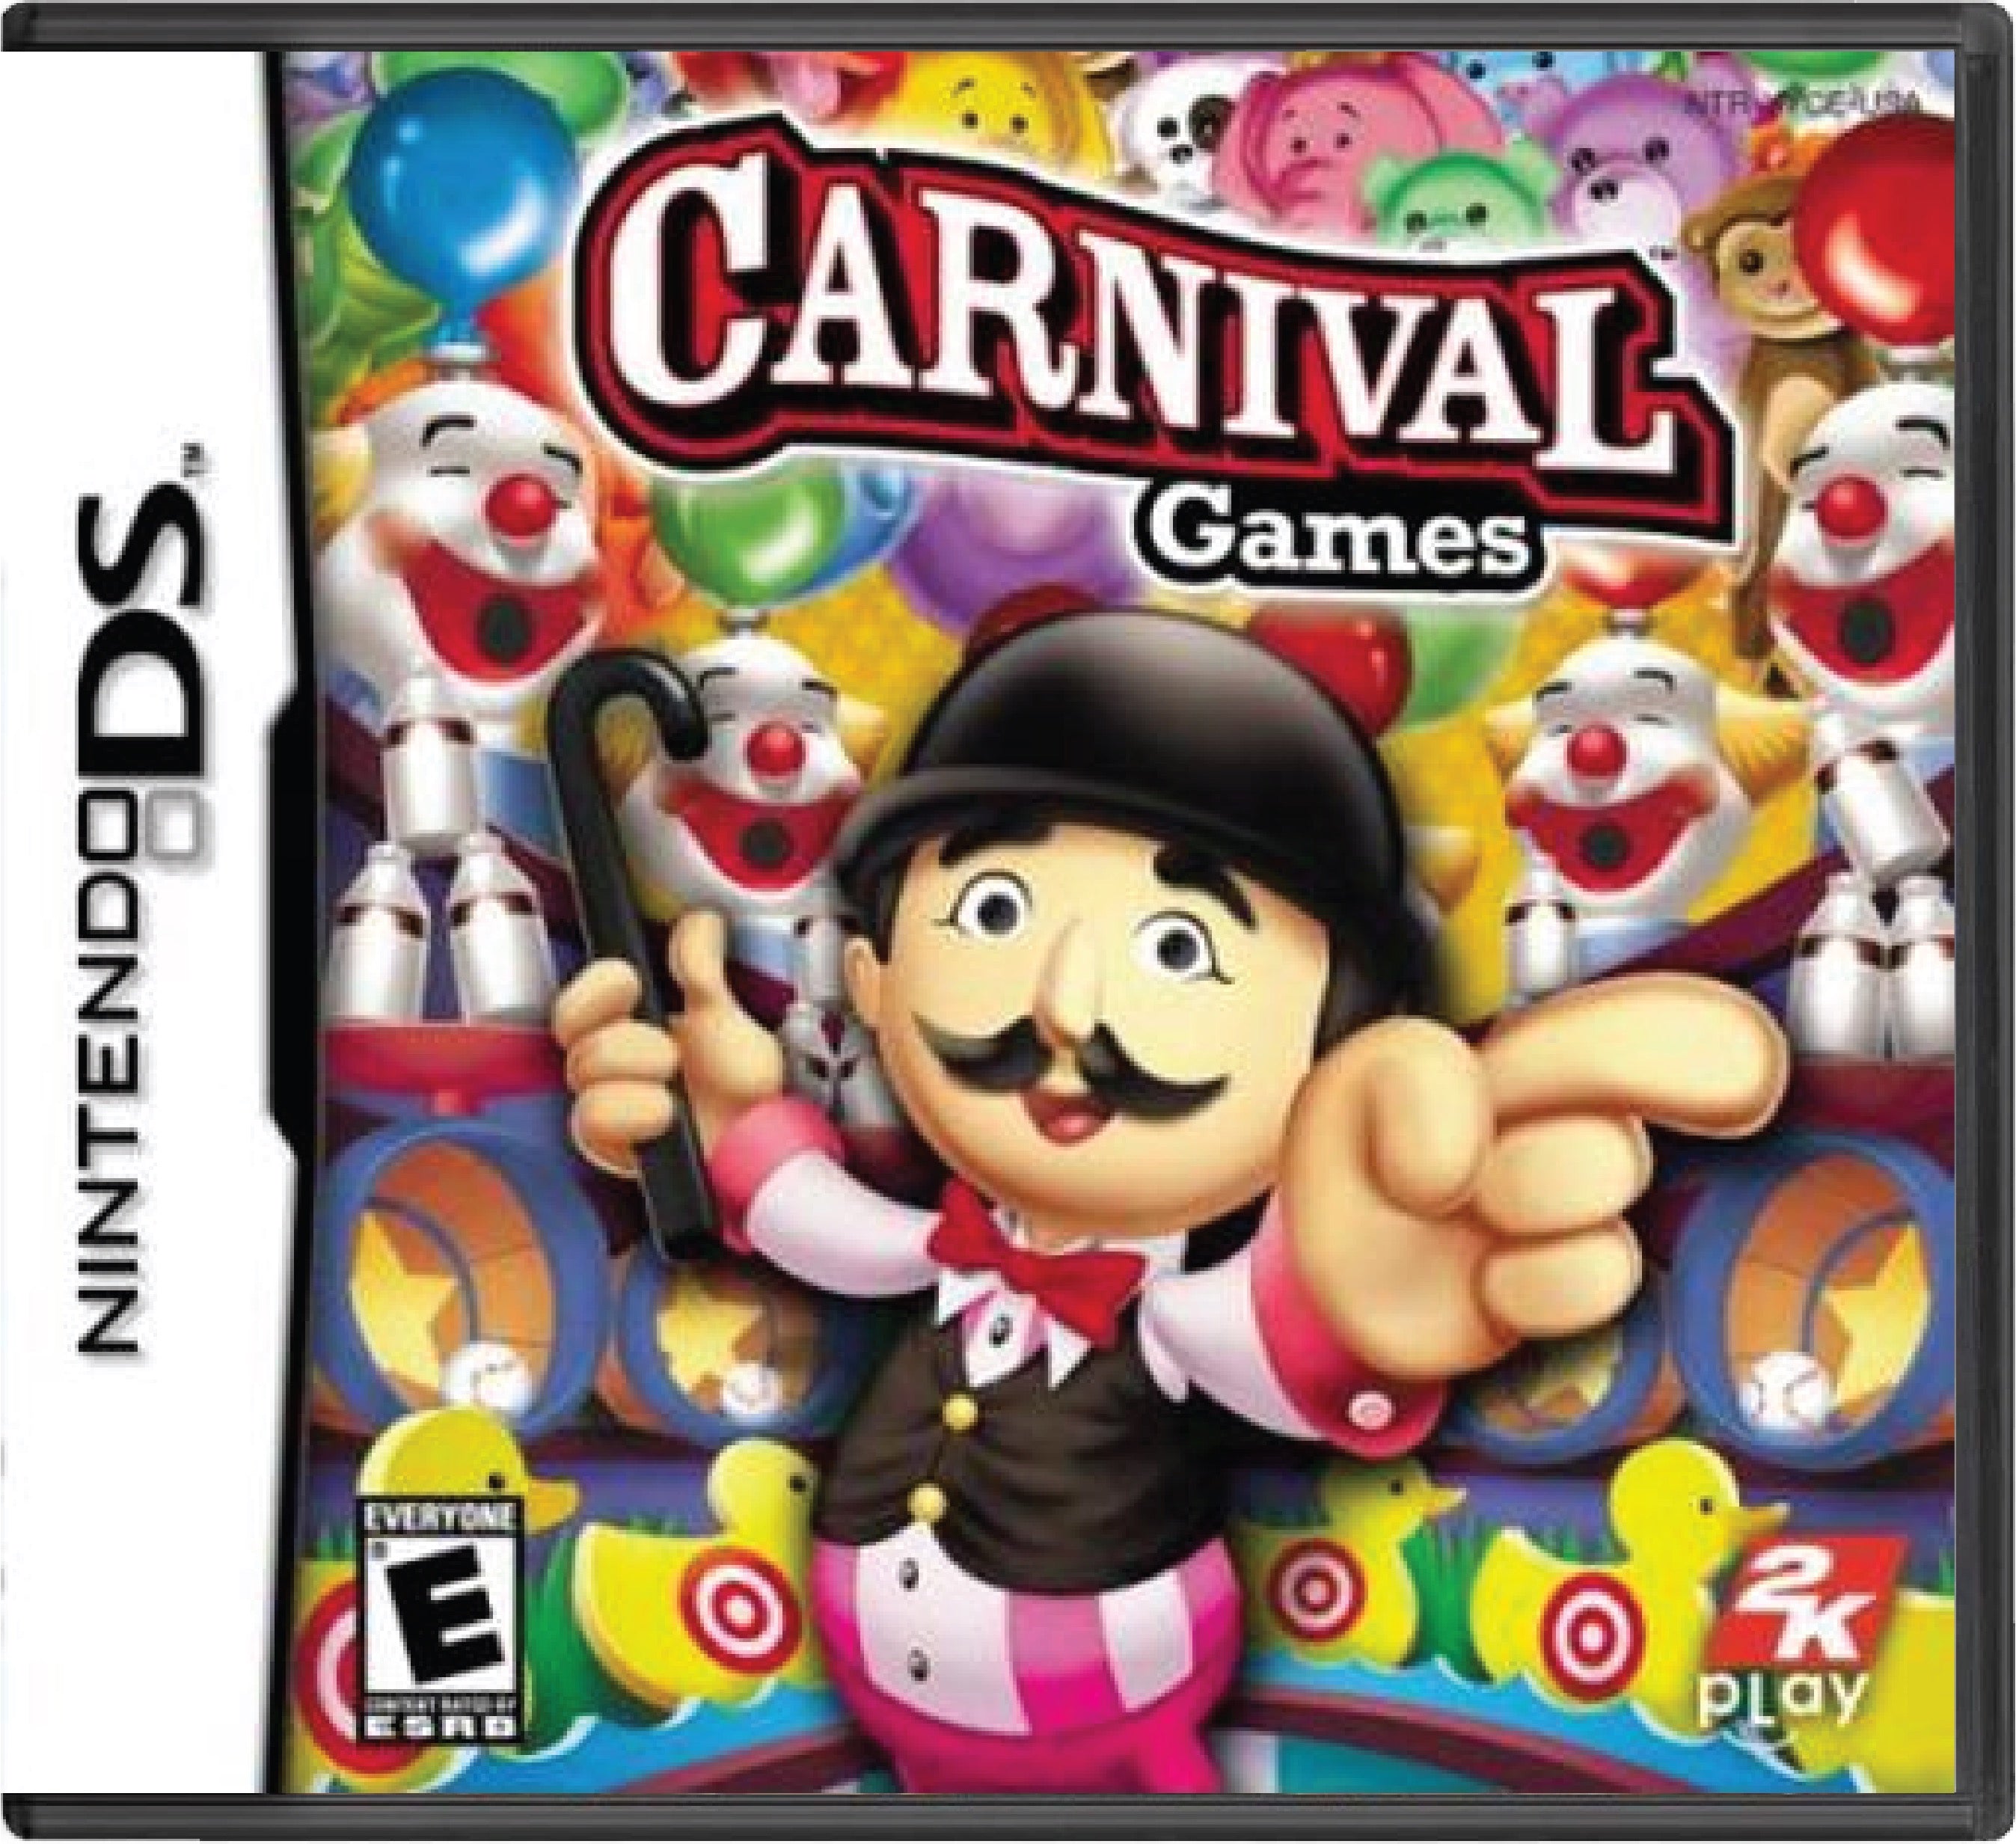 Carnival Games Cover Art